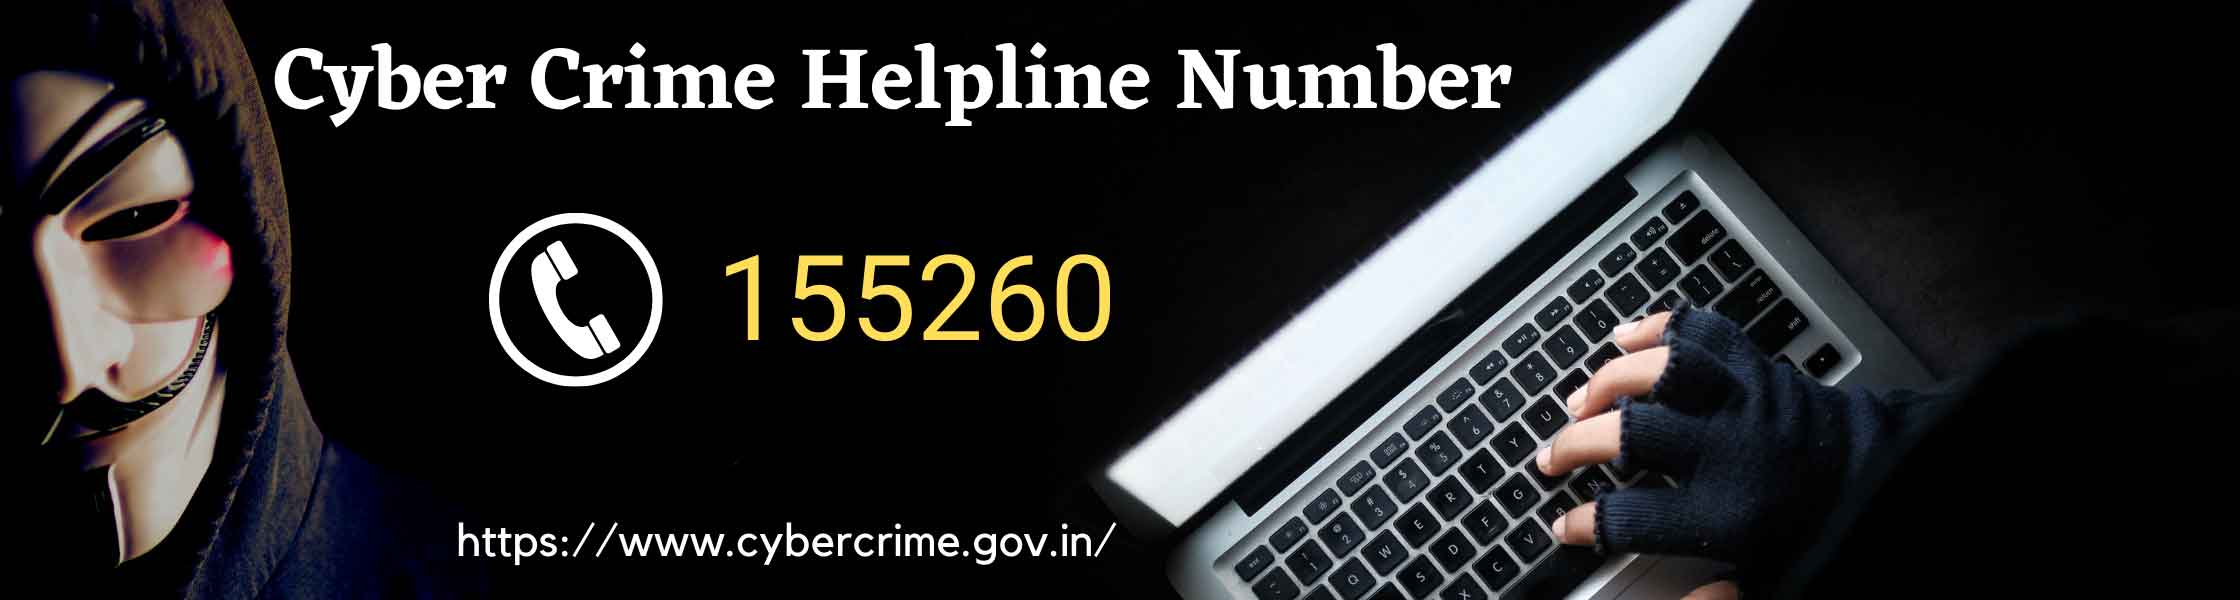 Cyber Crime Helpline Number